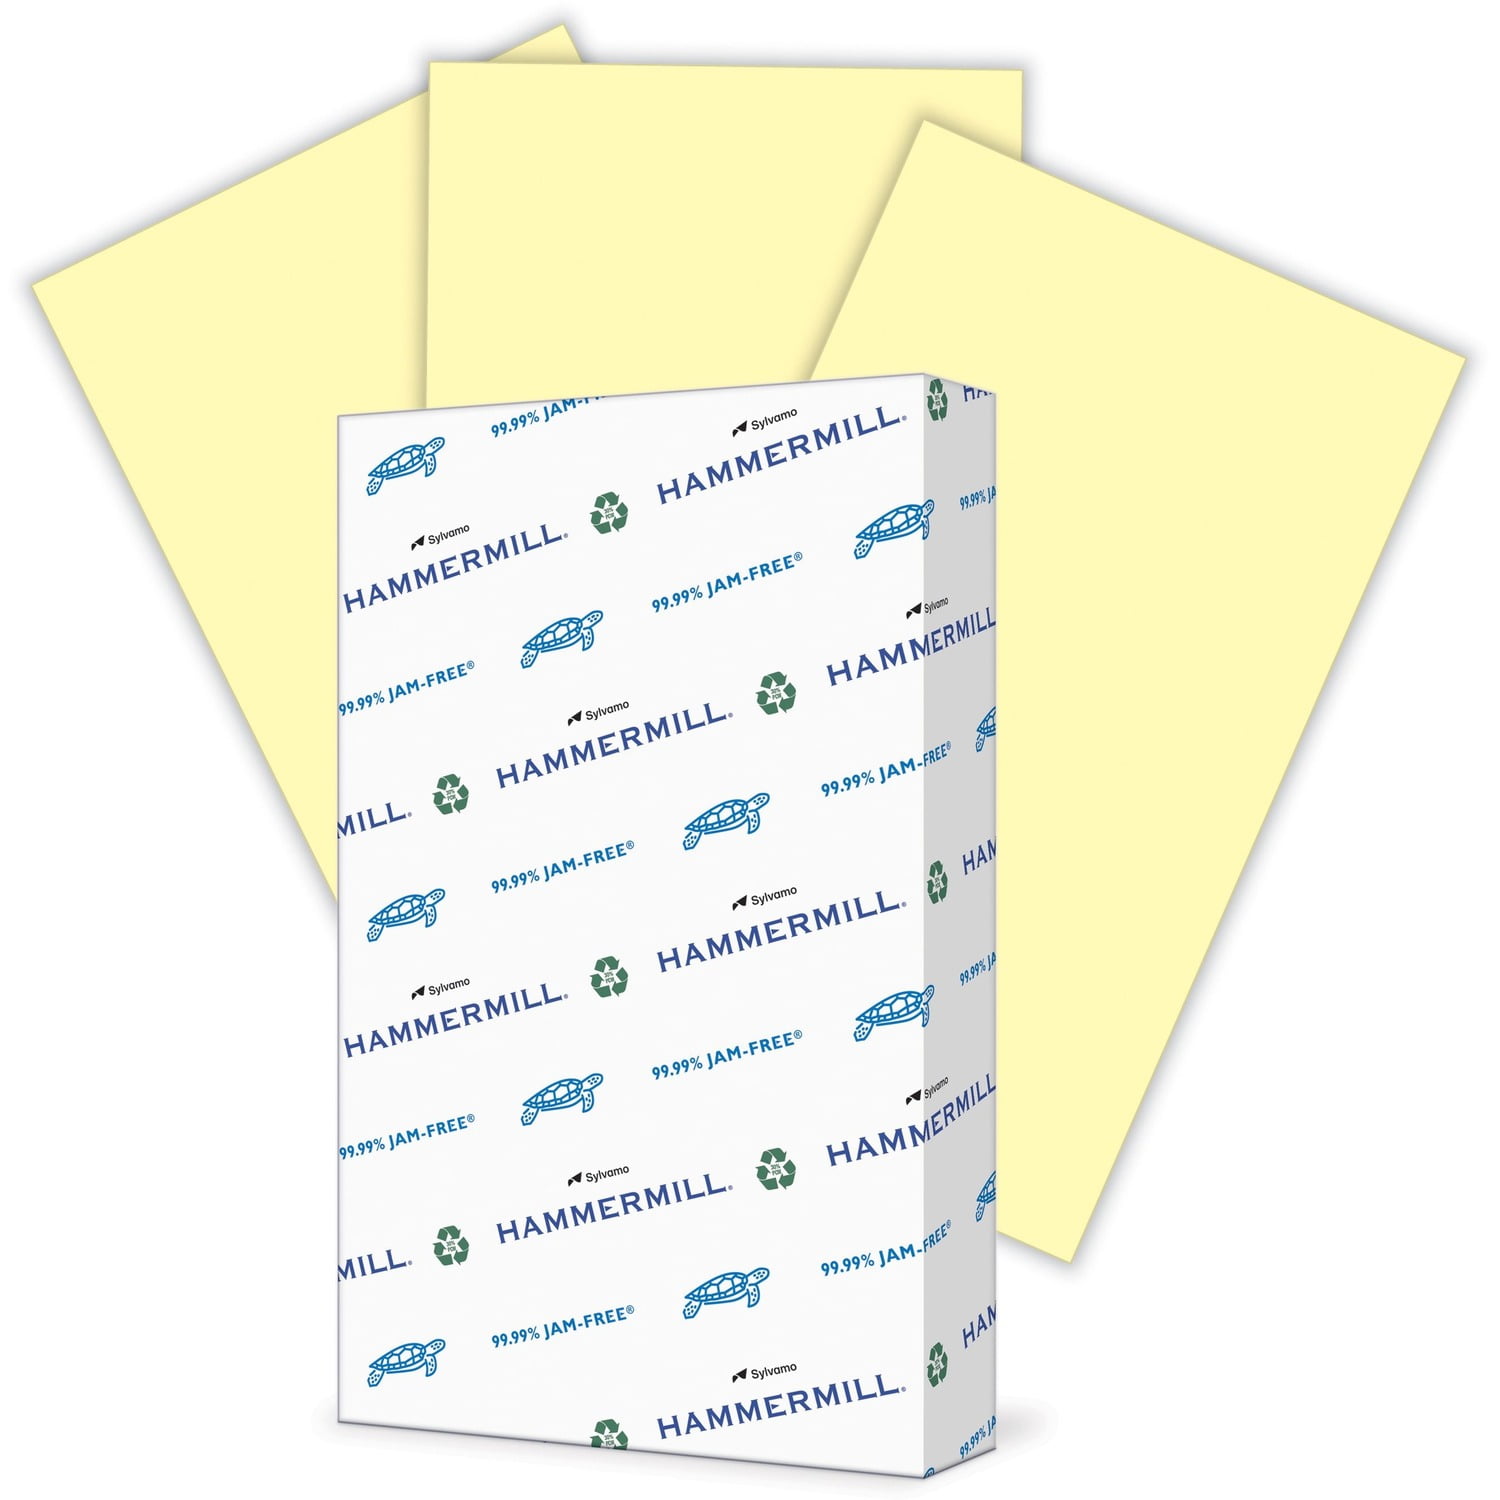 Basics 12-Sheet Cross-Cut Paper and Credit Card Home Office Shredder  & Multipurpose Copy Printer Paper, 8.5 x 11 Inch 20Lb Paper - 8 Ream Case